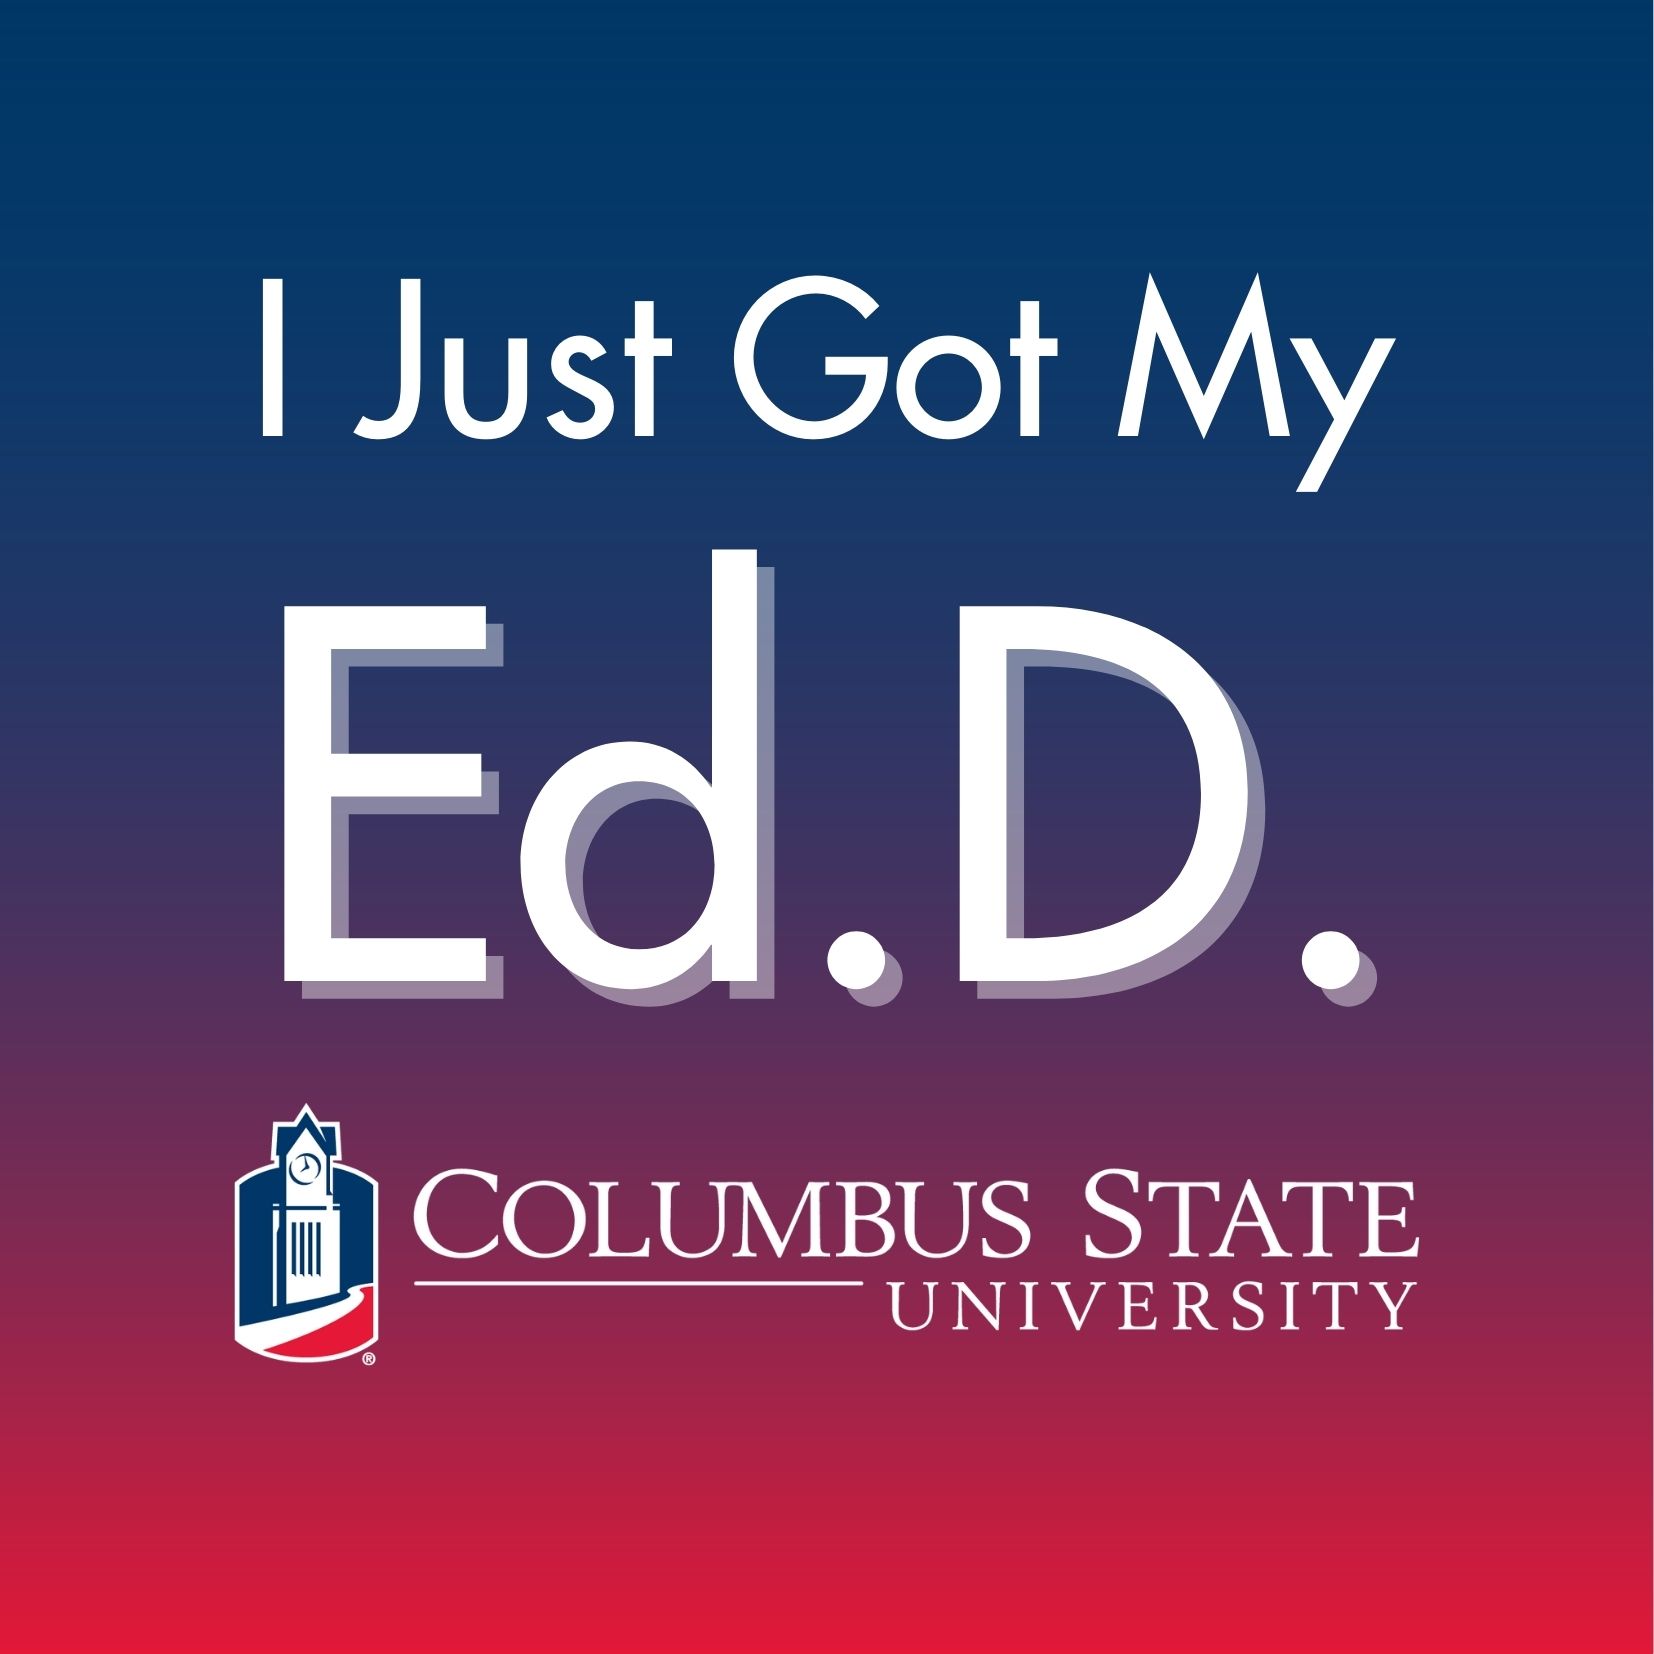 I Just Got My Ed.D.